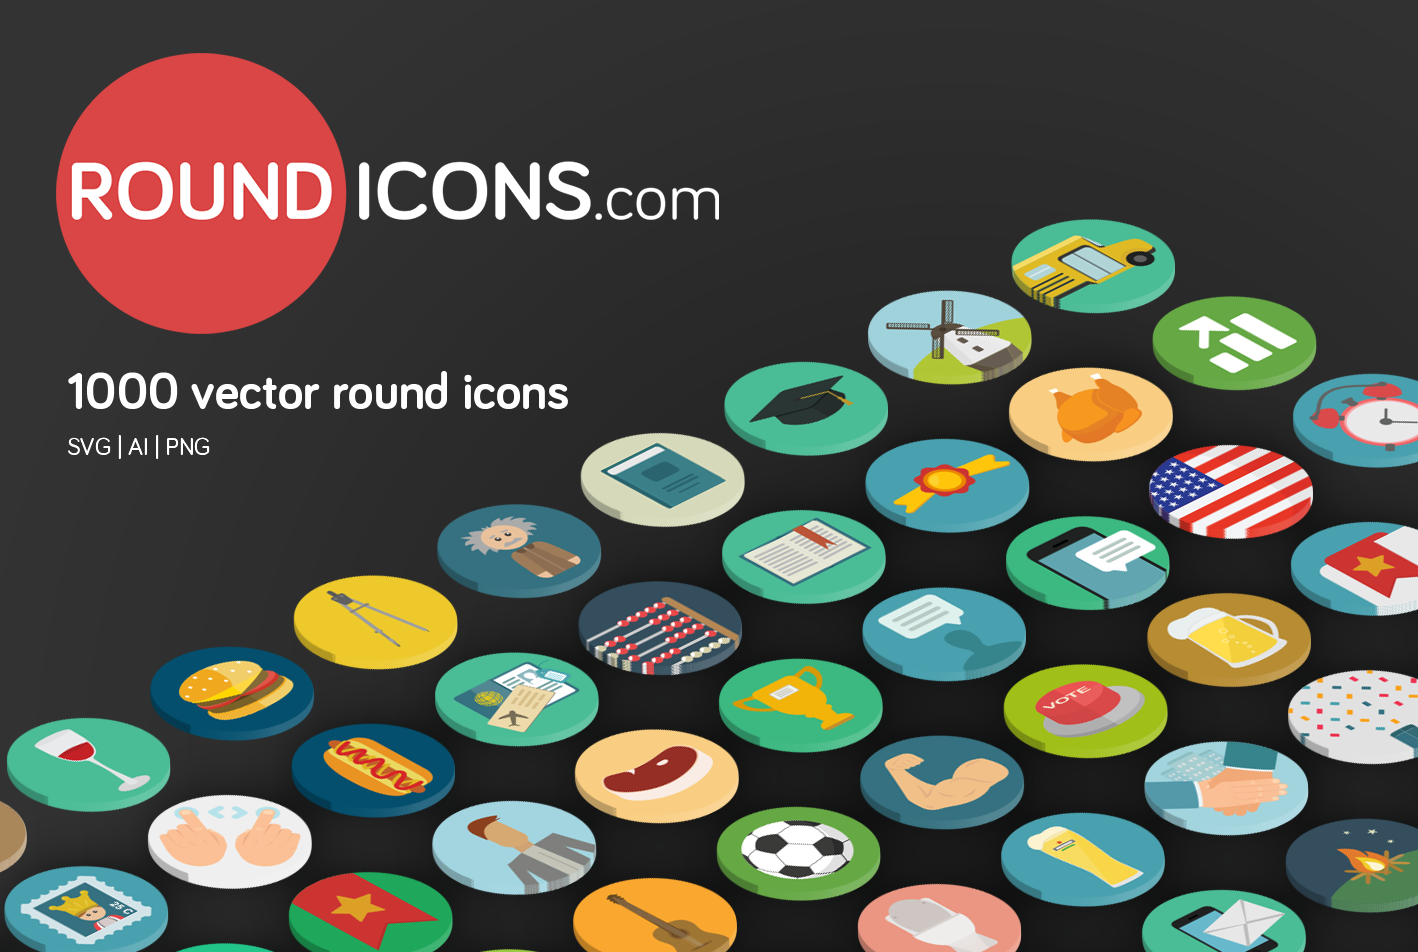 Free Flat Round Icons